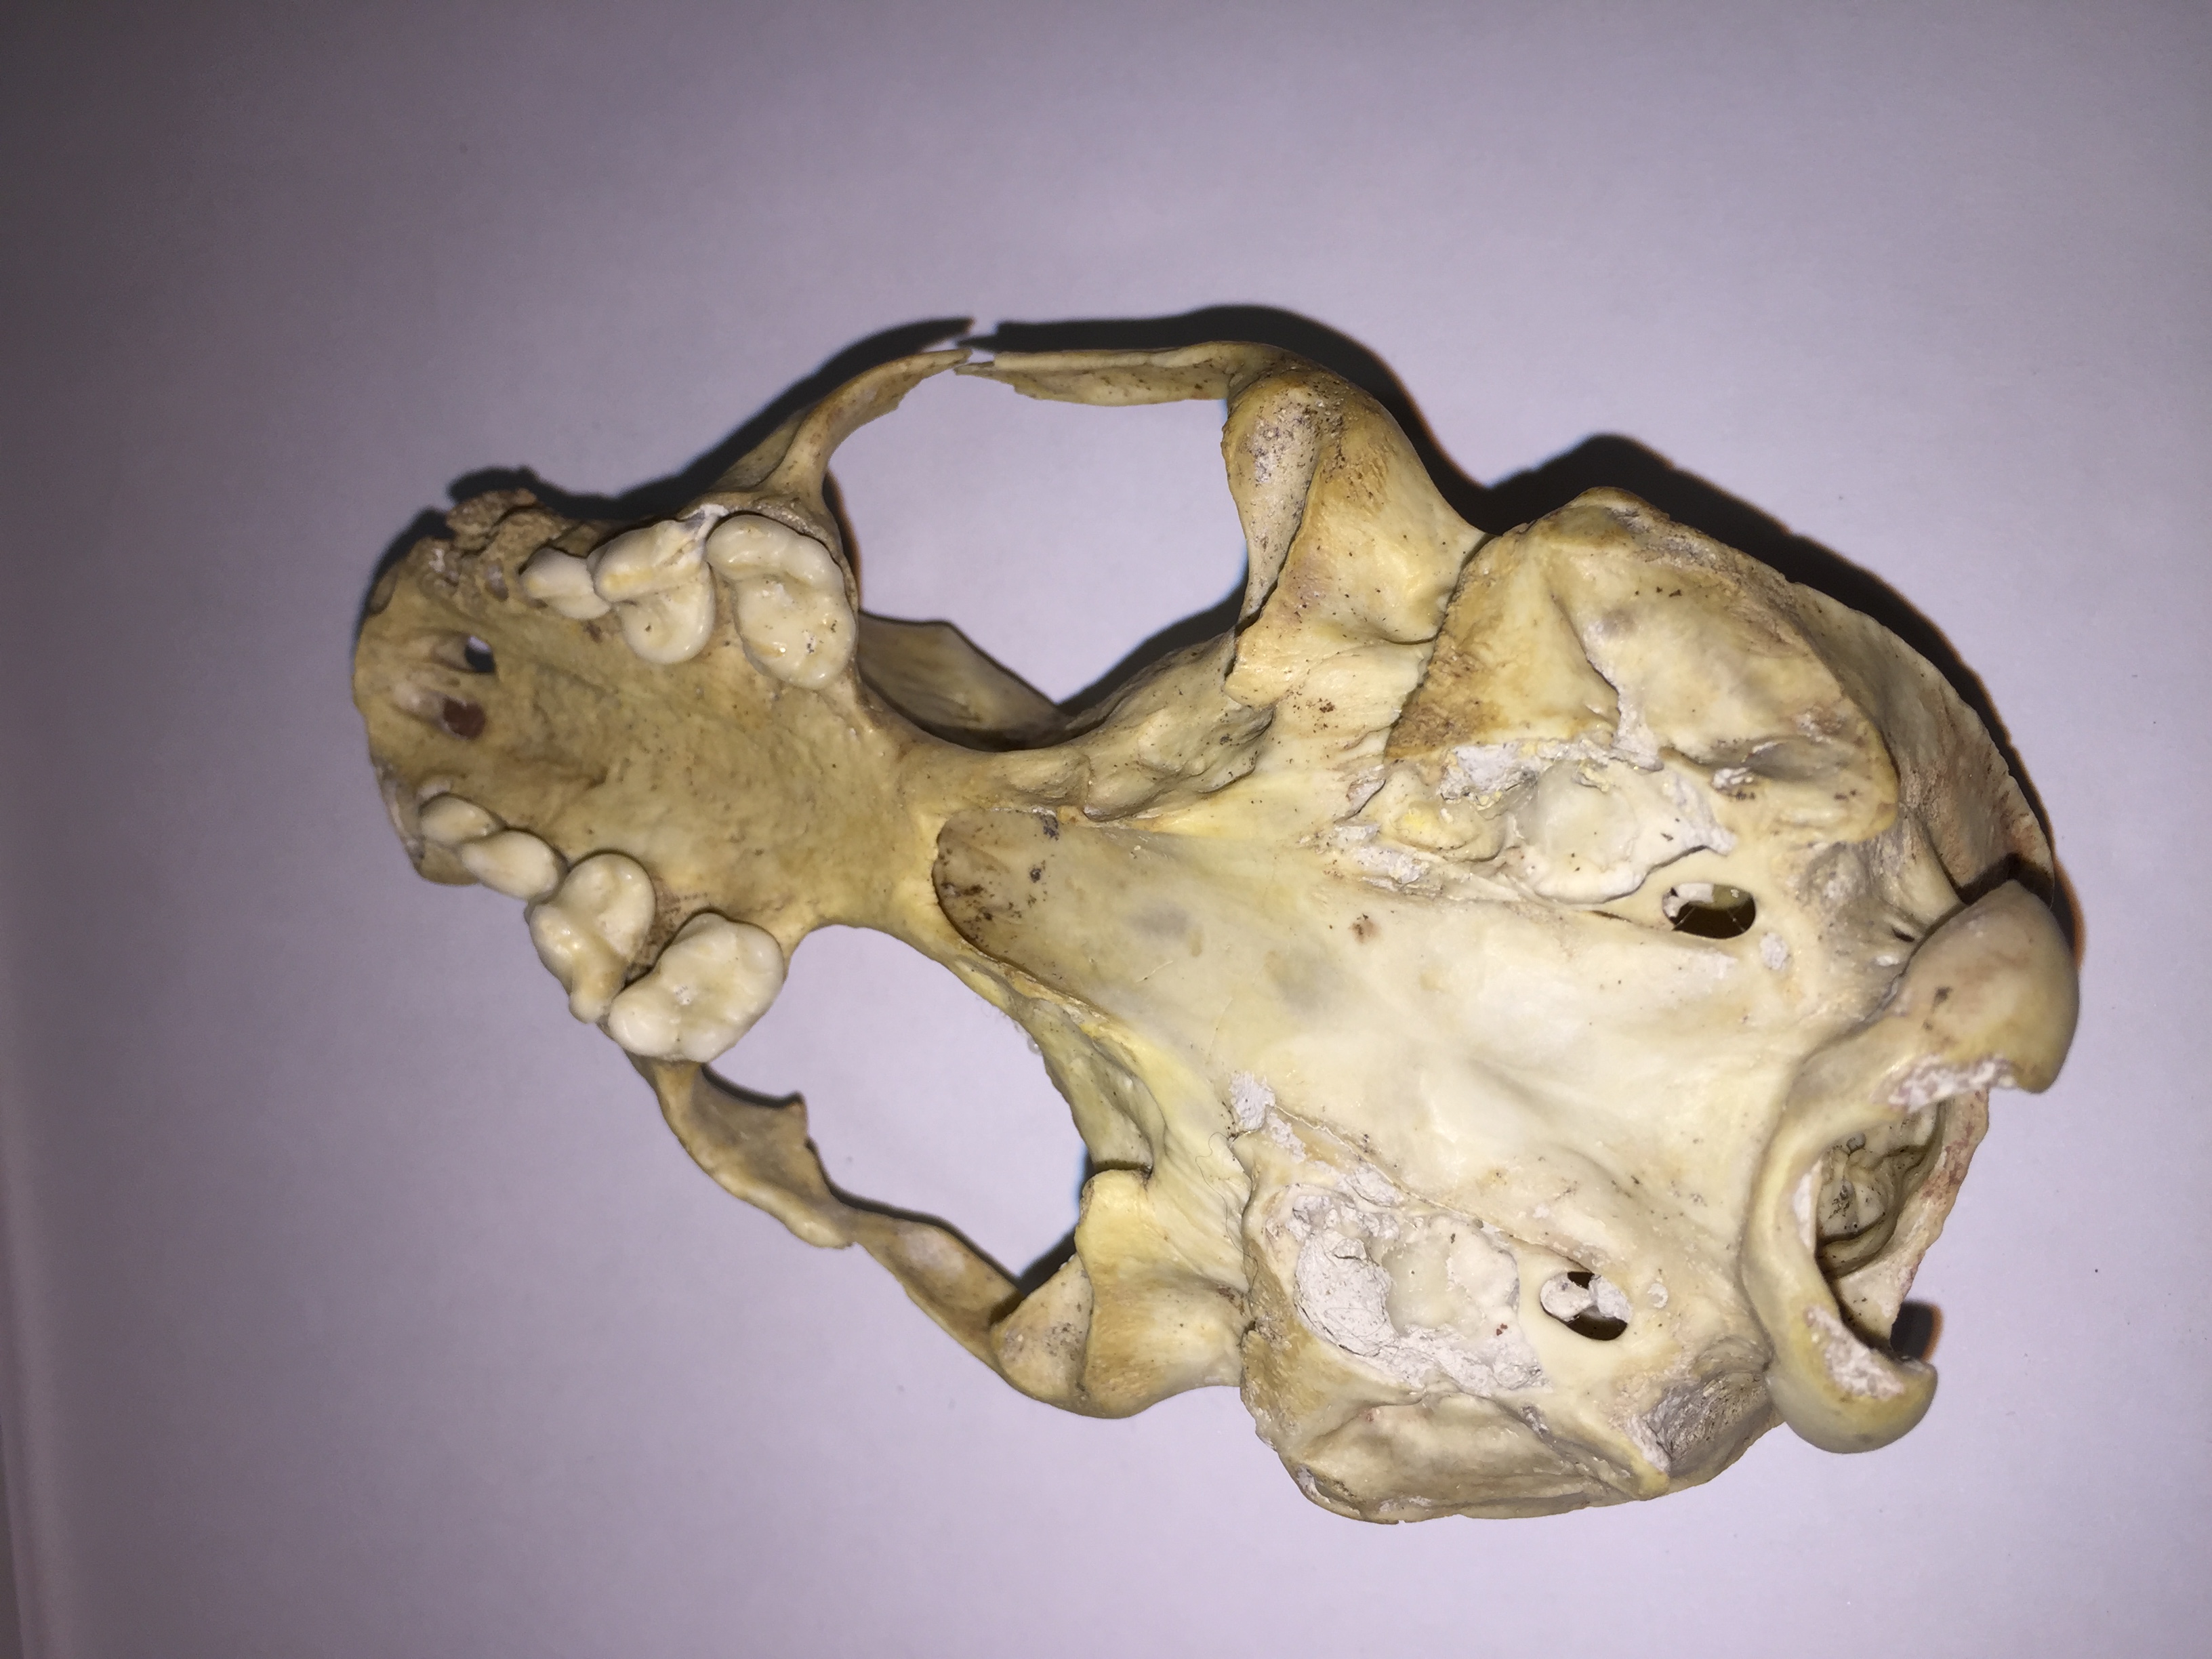 NaturePlus: What is this animal skull ?